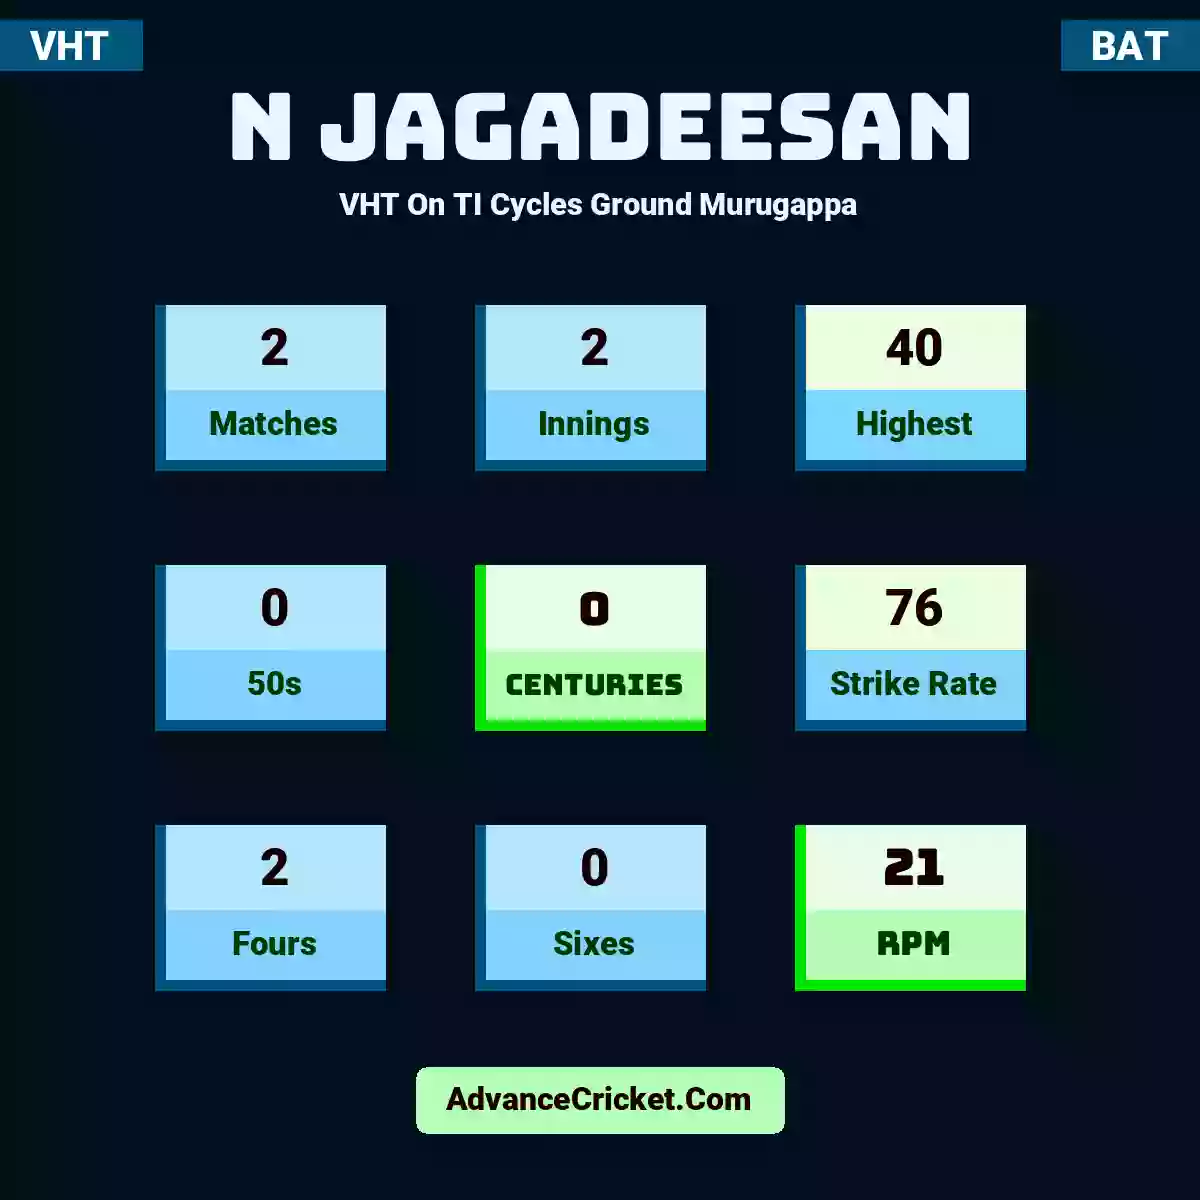 N Jagadeesan VHT  On TI Cycles Ground Murugappa, N Jagadeesan played 2 matches, scored 40 runs as highest, 0 half-centuries, and 0 centuries, with a strike rate of 76. N.Jagadeesan hit 2 fours and 0 sixes, with an RPM of 21.